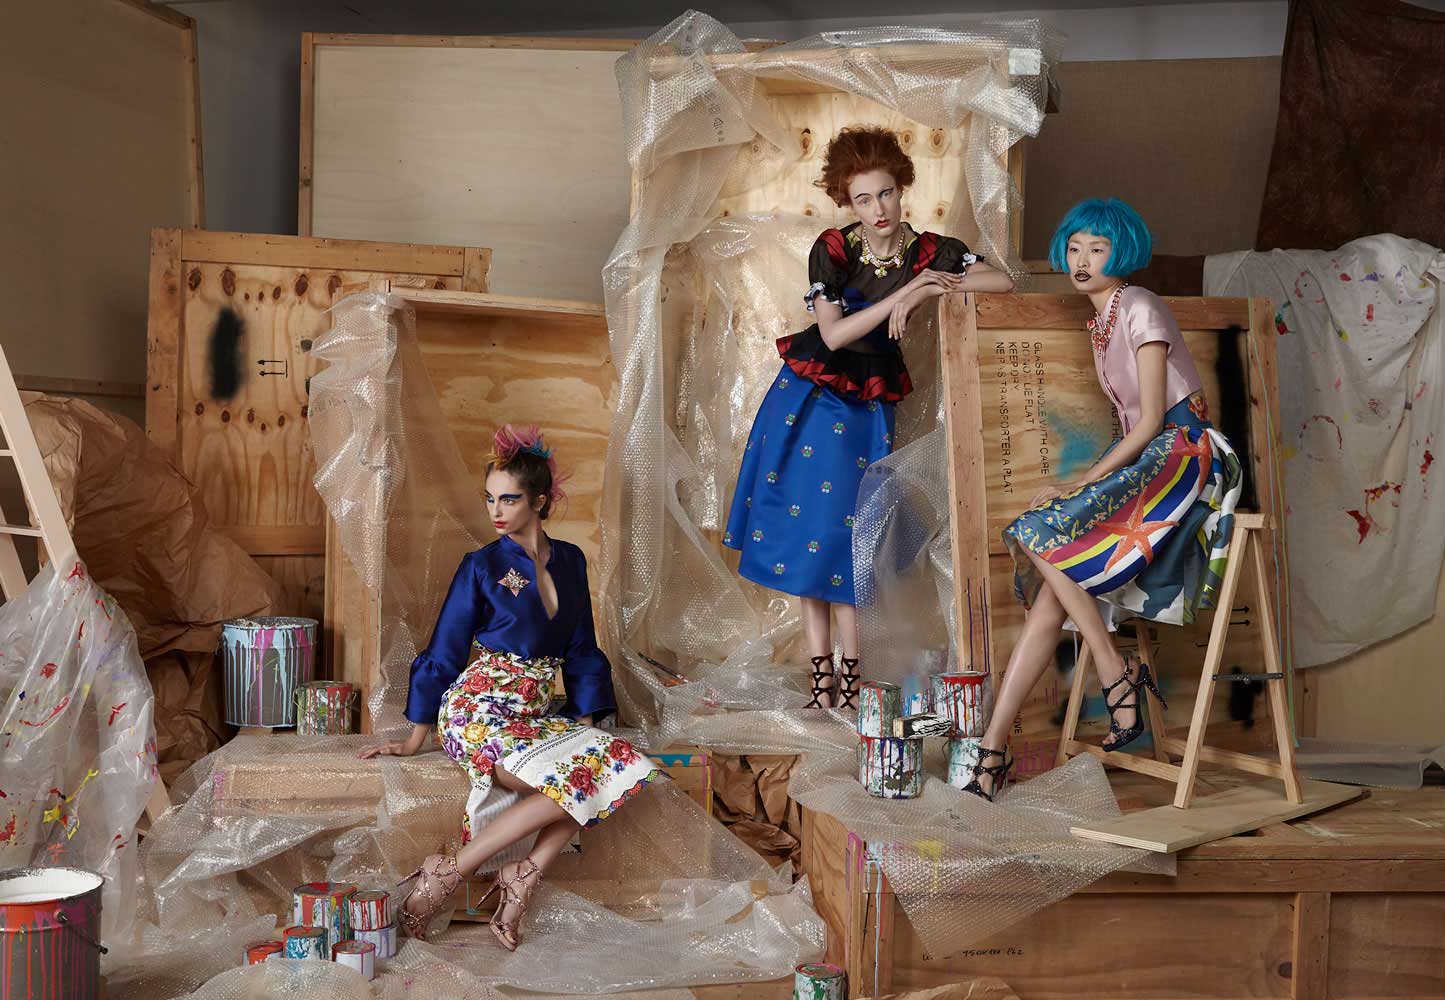 Vogue Italia Talents on Set, Gallery Girls